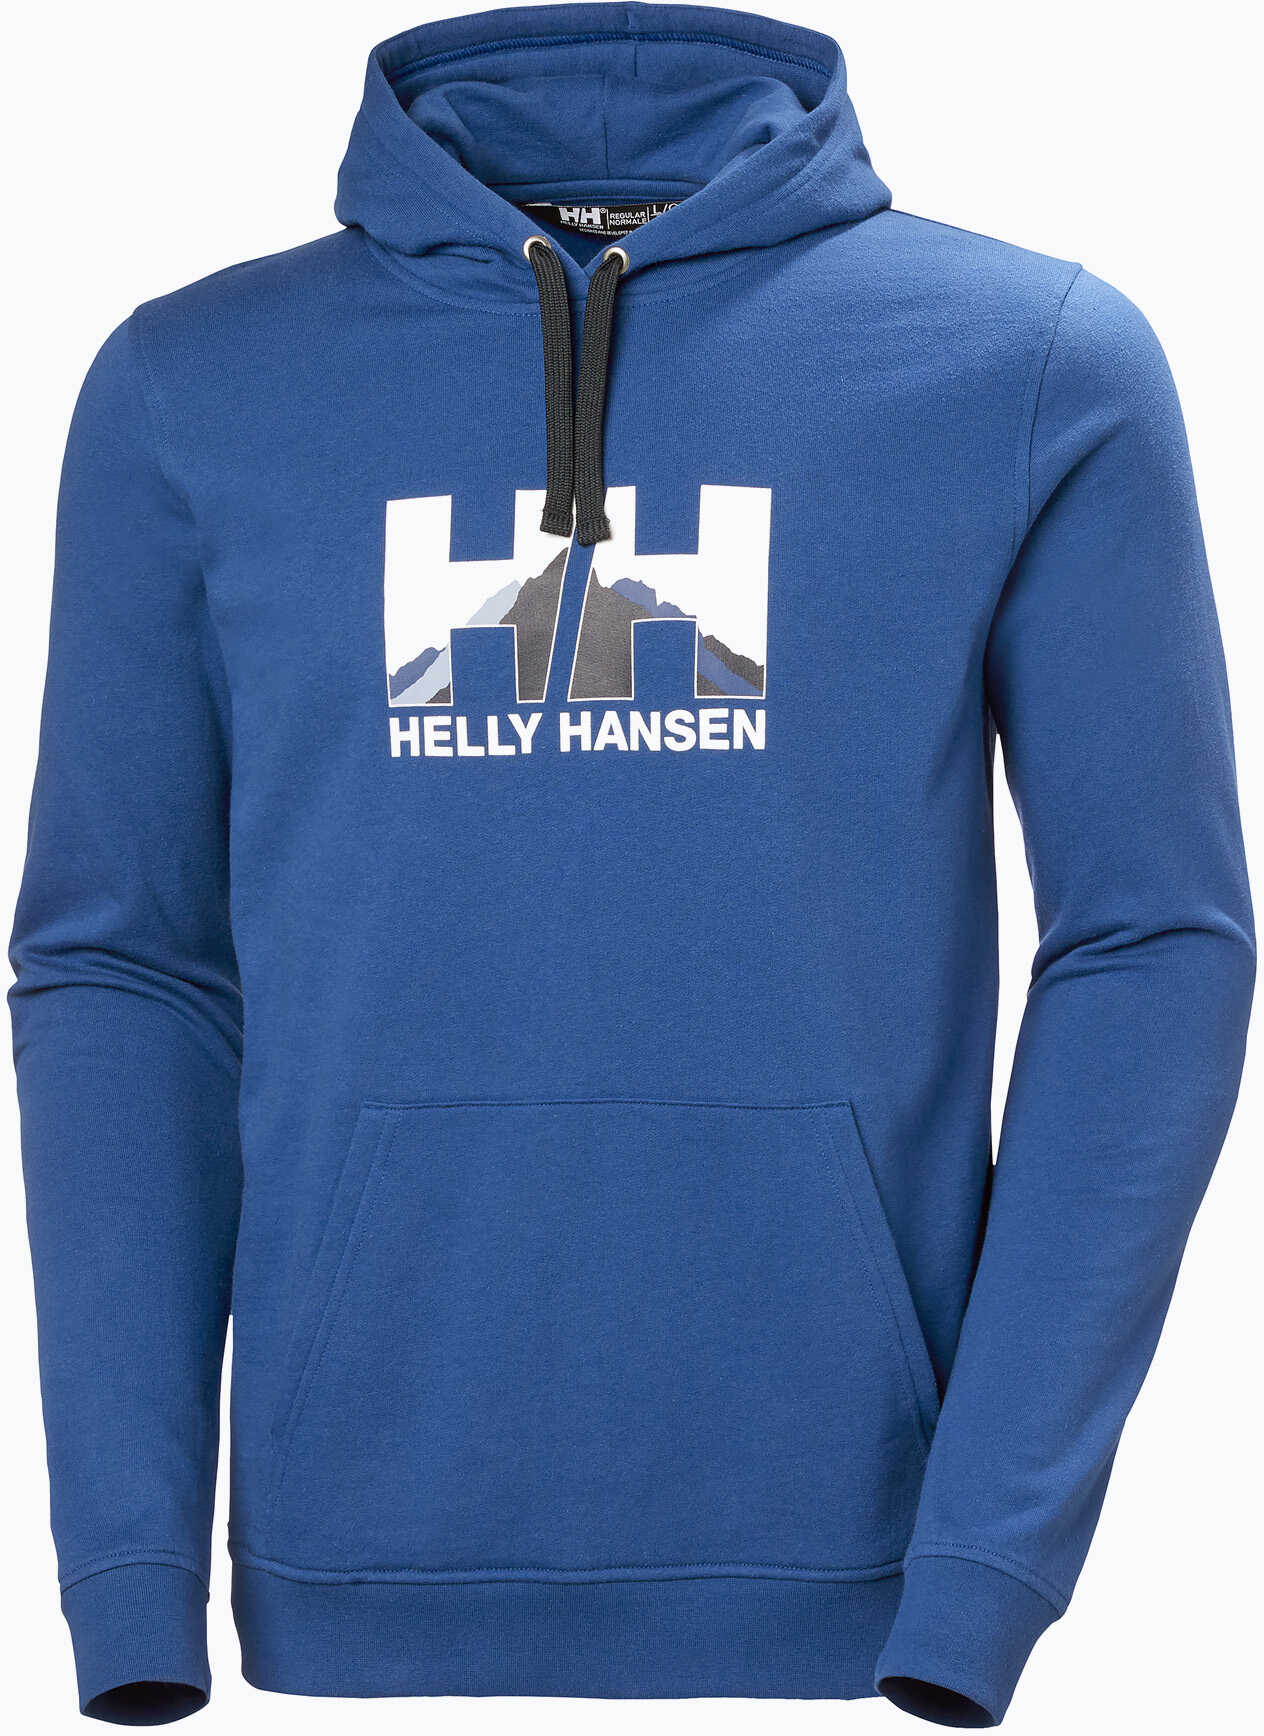 Bluza trekkingowa męska Helly Hansen Nord Graphic Pull Over 606 niebieska 62975 WYSYŁKA W 24H 30 DNI NA ZWROT